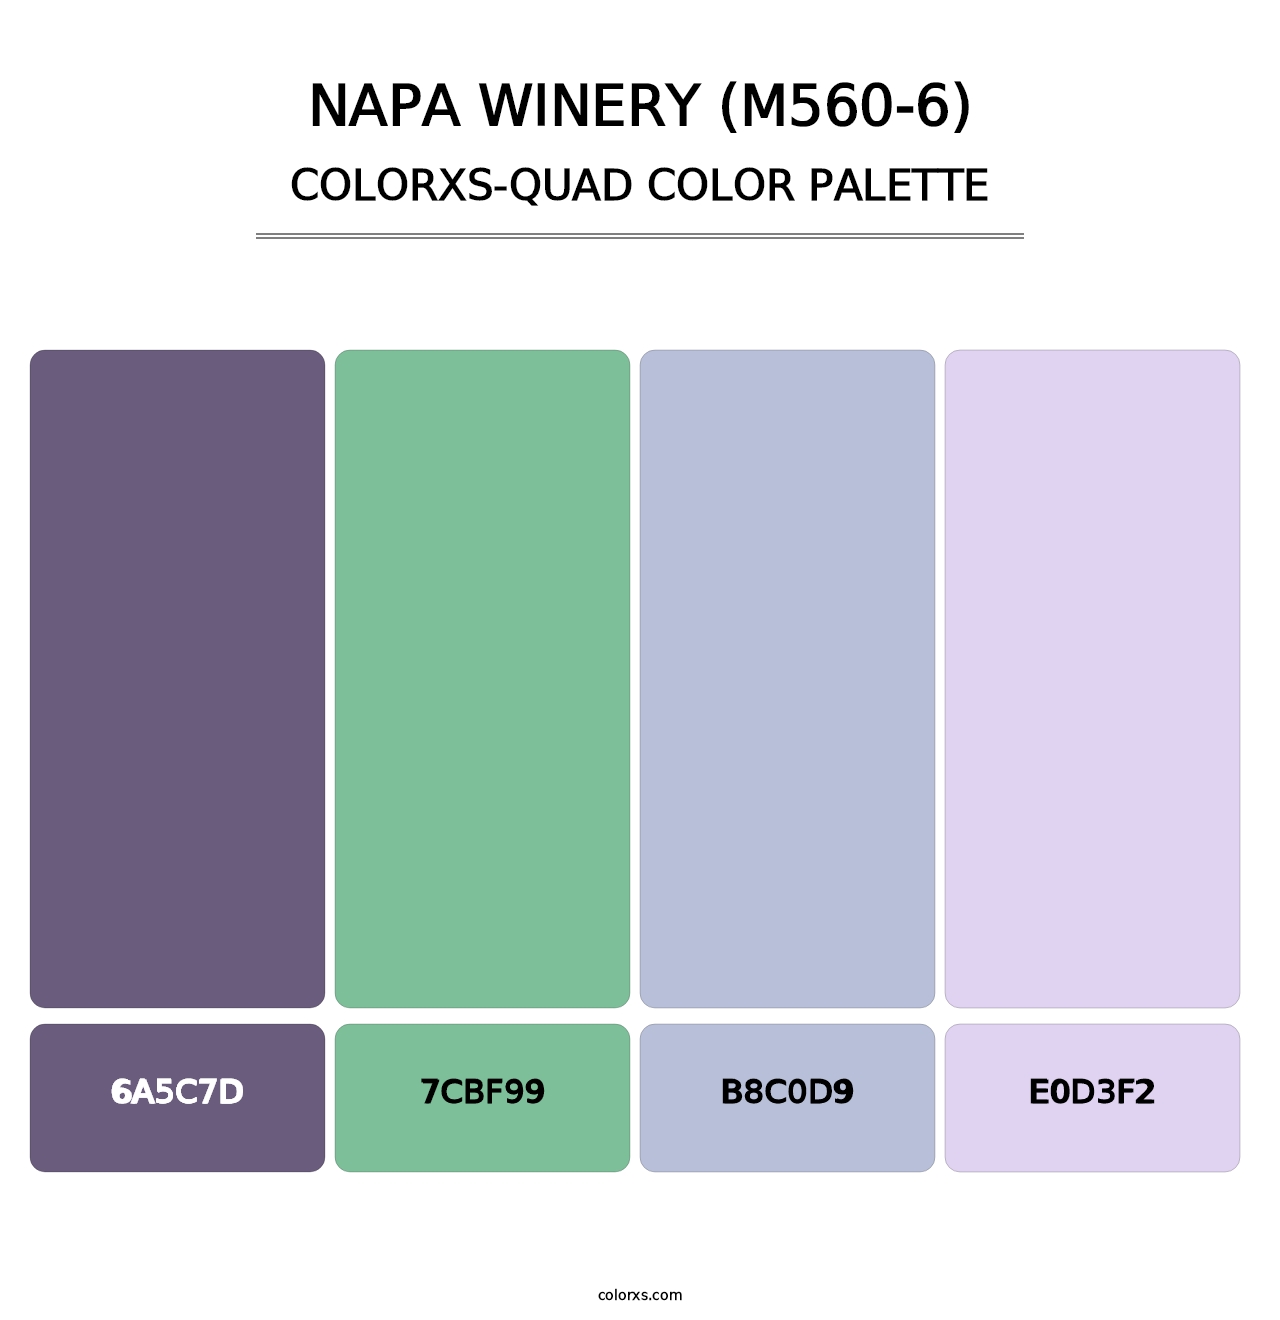 Napa Winery (M560-6) - Colorxs Quad Palette